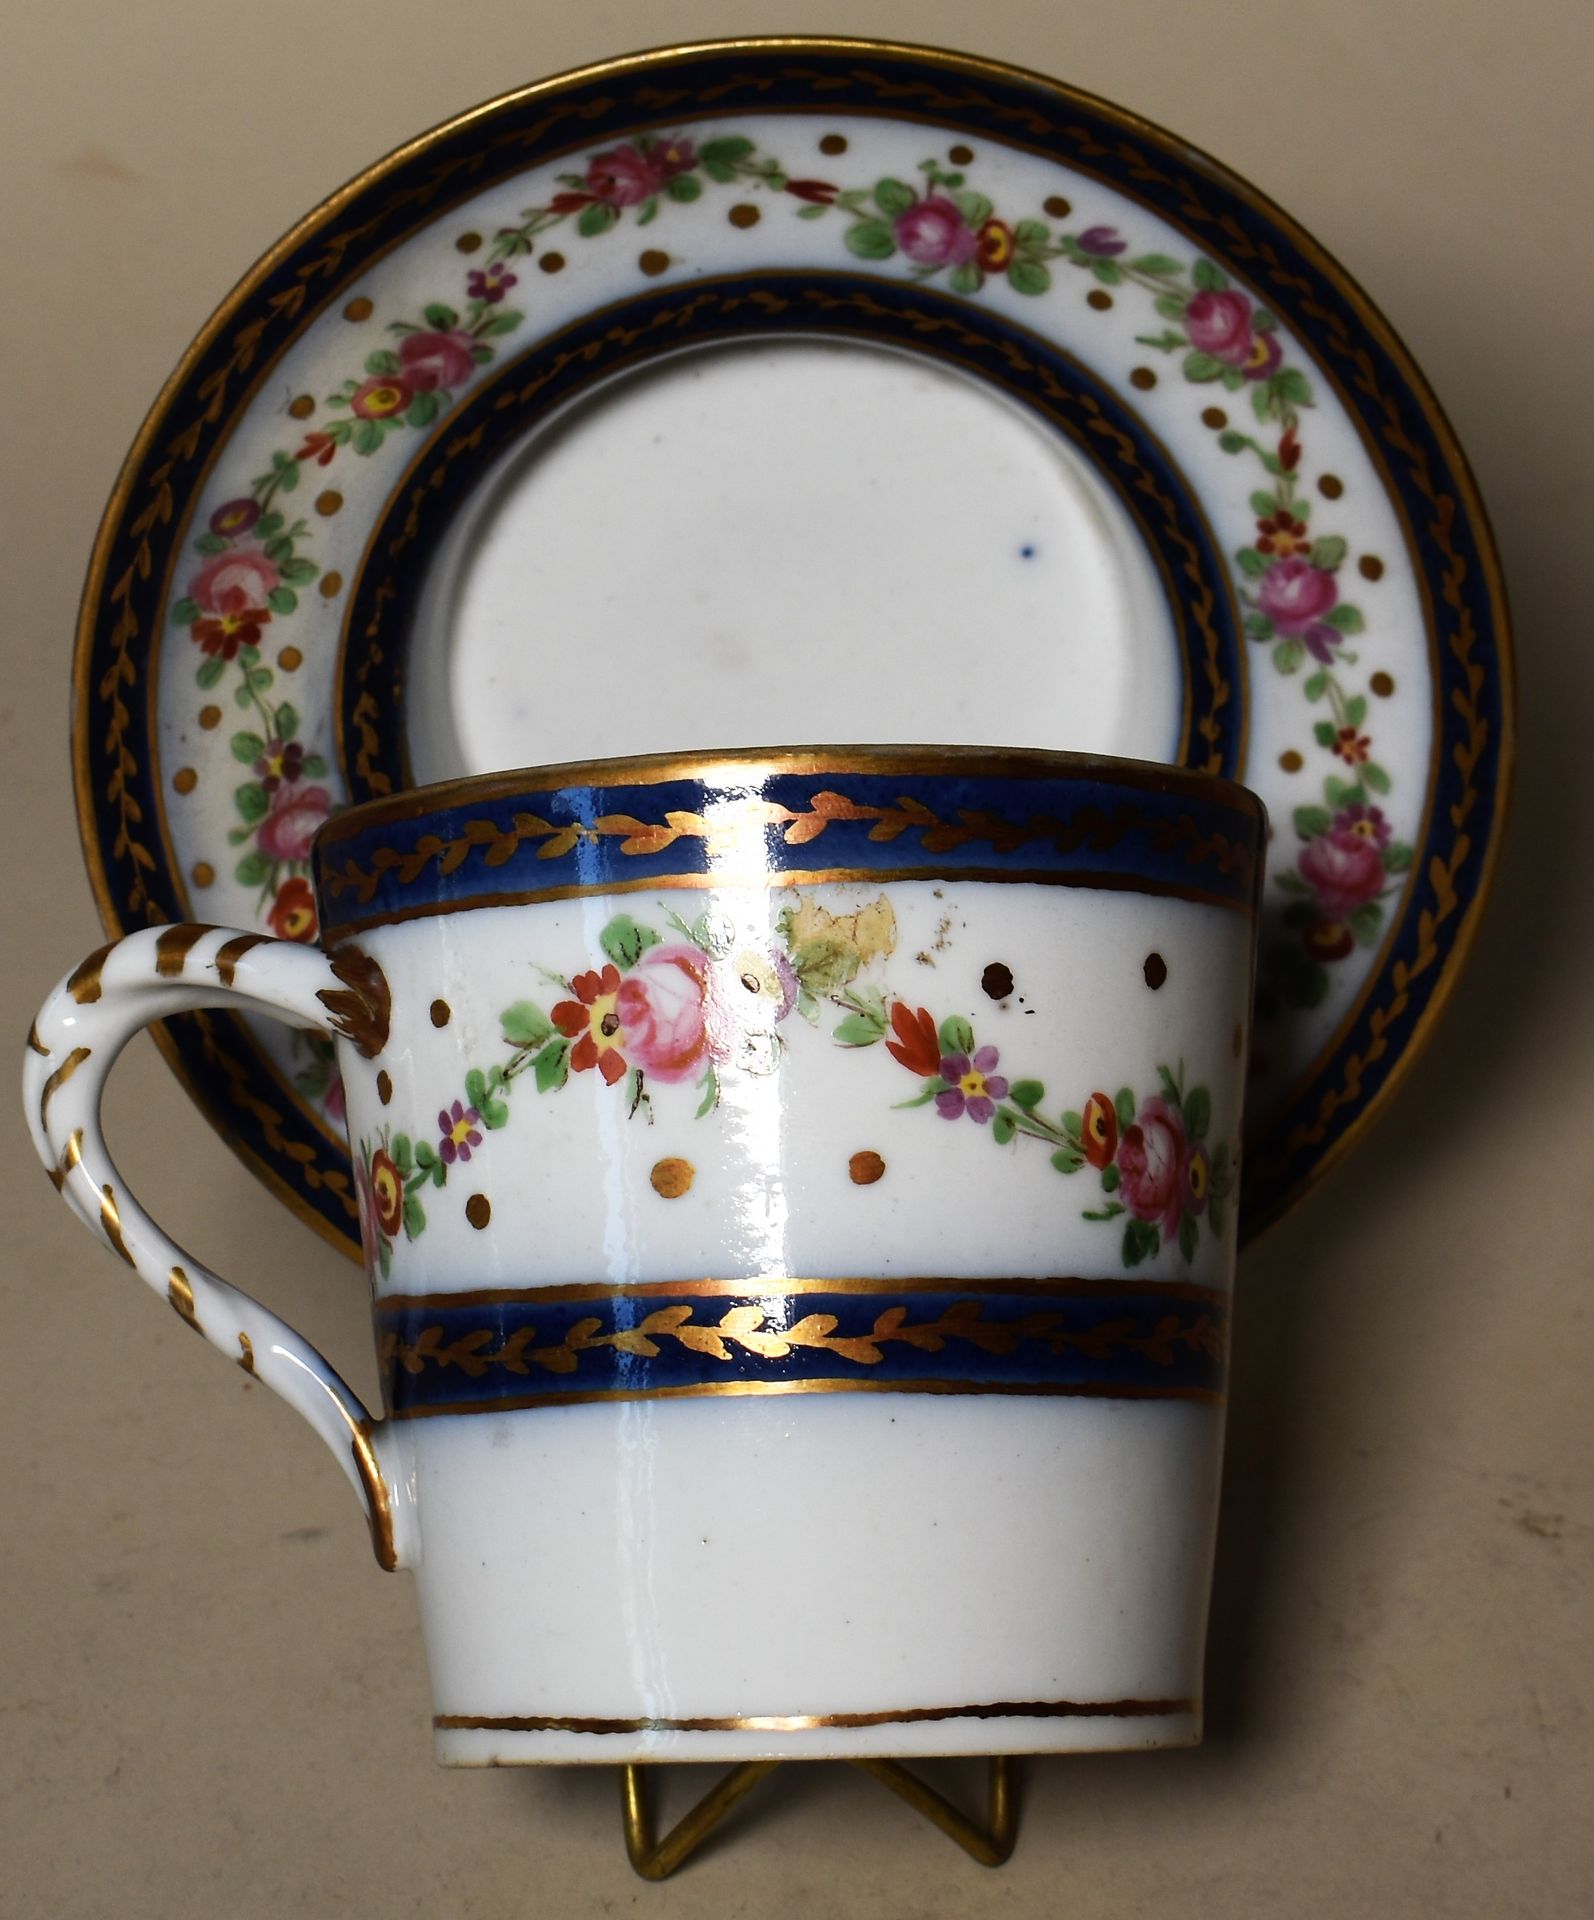 Null 奥尔良：大型颤动杯和其碟子，瓷器，有多色和金色的花卉装饰。扭曲的手柄。18世纪。杯子高度9 - 茶盘直径15厘米

(缺少盖子)

交付给书房的地段